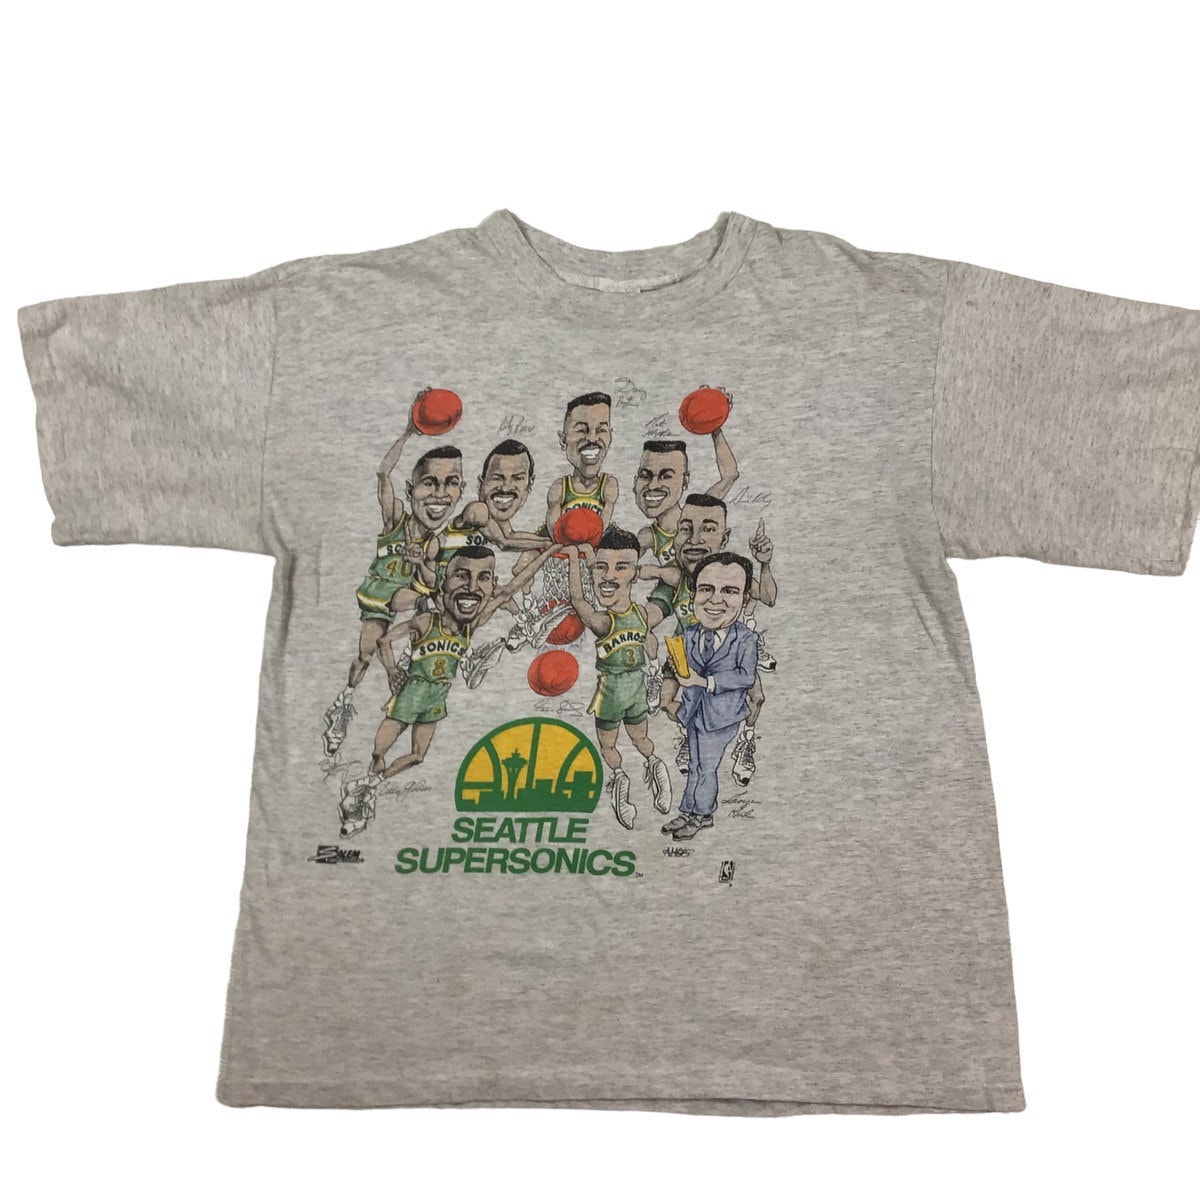 Vintage 90s Seattle Sonics NBA Crewneck Sweatshirt. Made in The USA